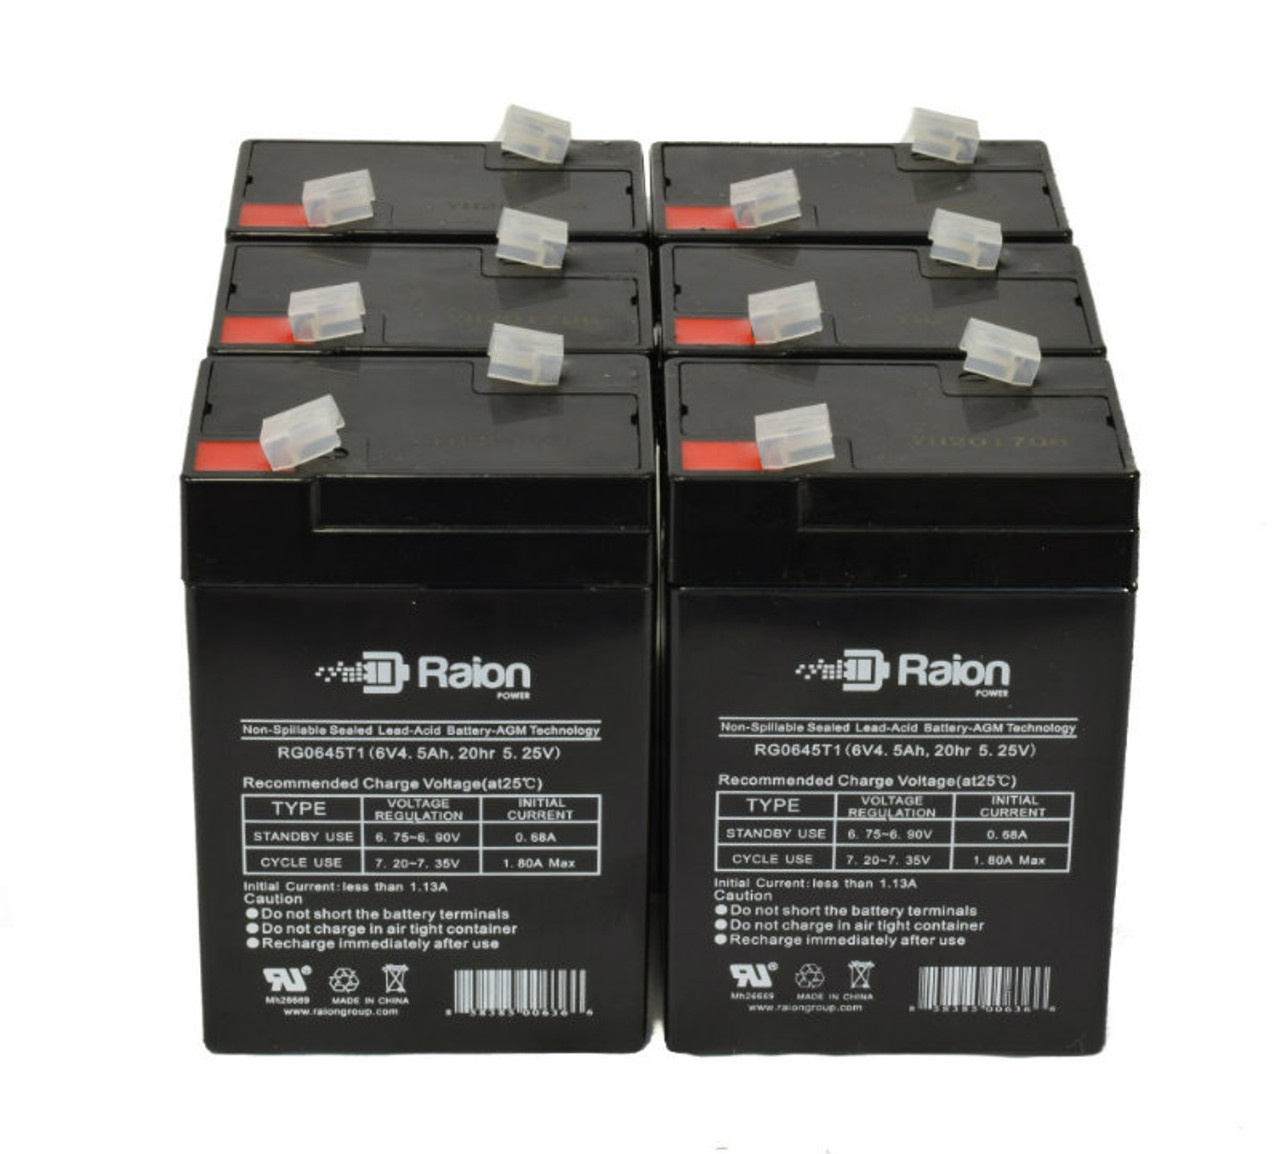 Raion Power 6 Volt 4.5Ah RG0645T1 Replacement Battery for Delta DTM 6045 - 6 Pack